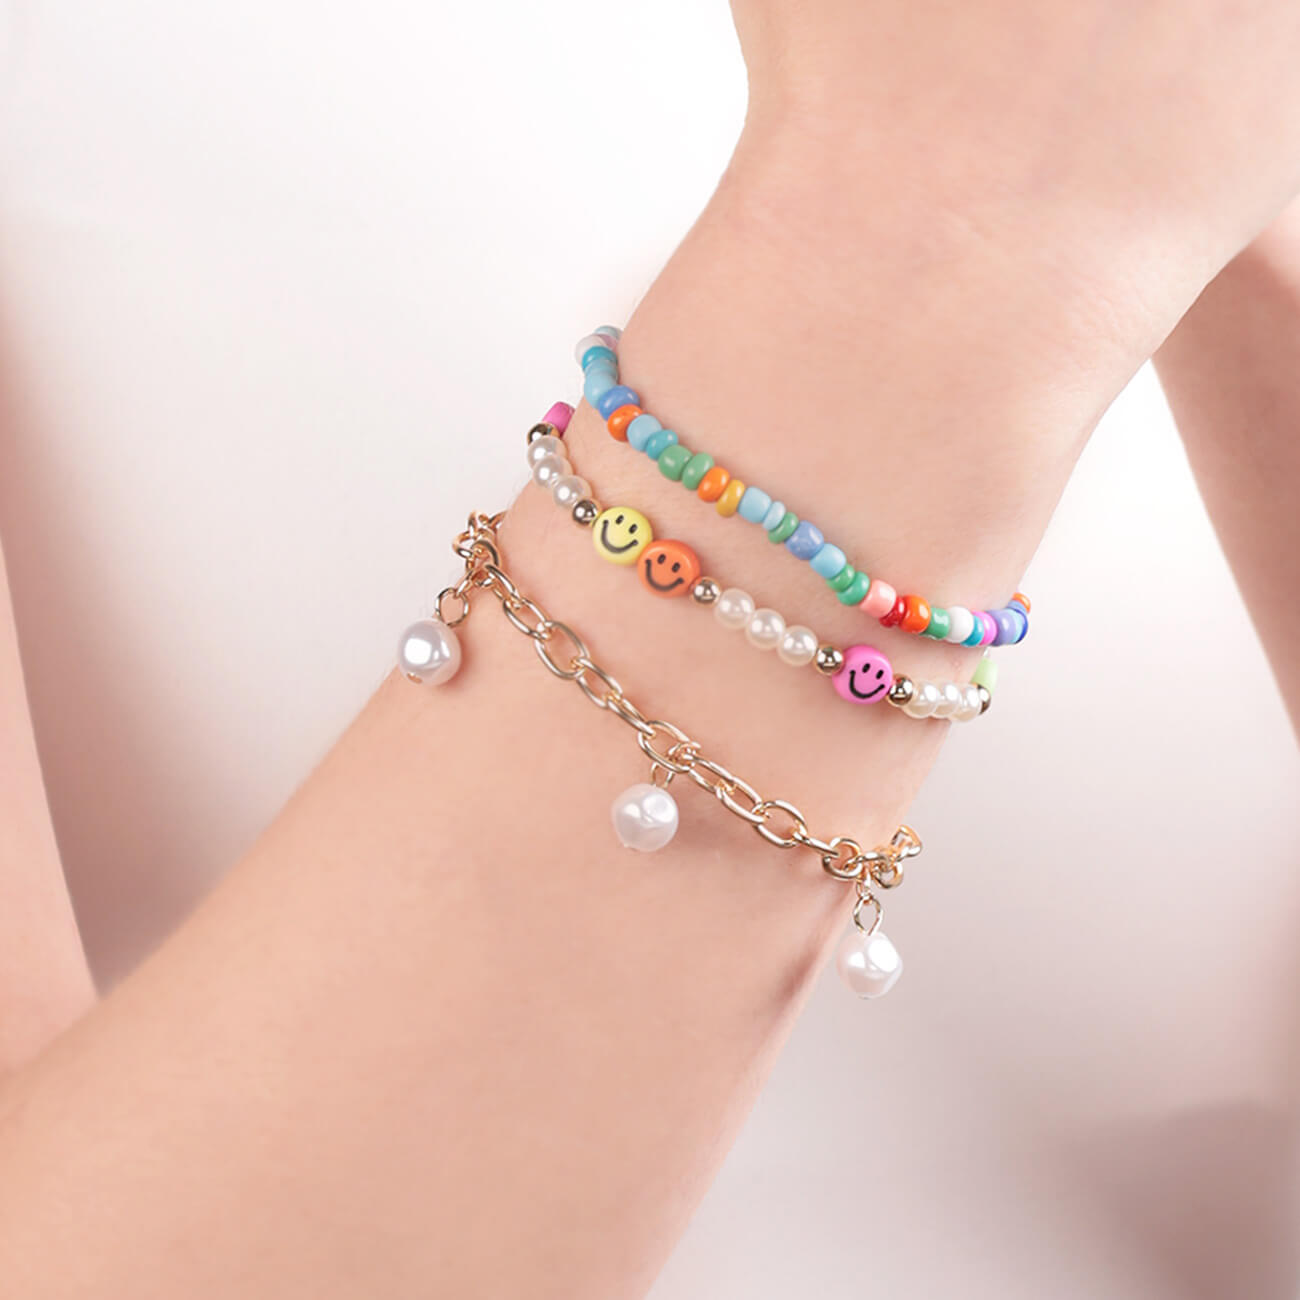 Bracelet, 9 cm, 3 pcs, plastic / metal, mix, Emoticons and pearls, Pearl изображение № 1